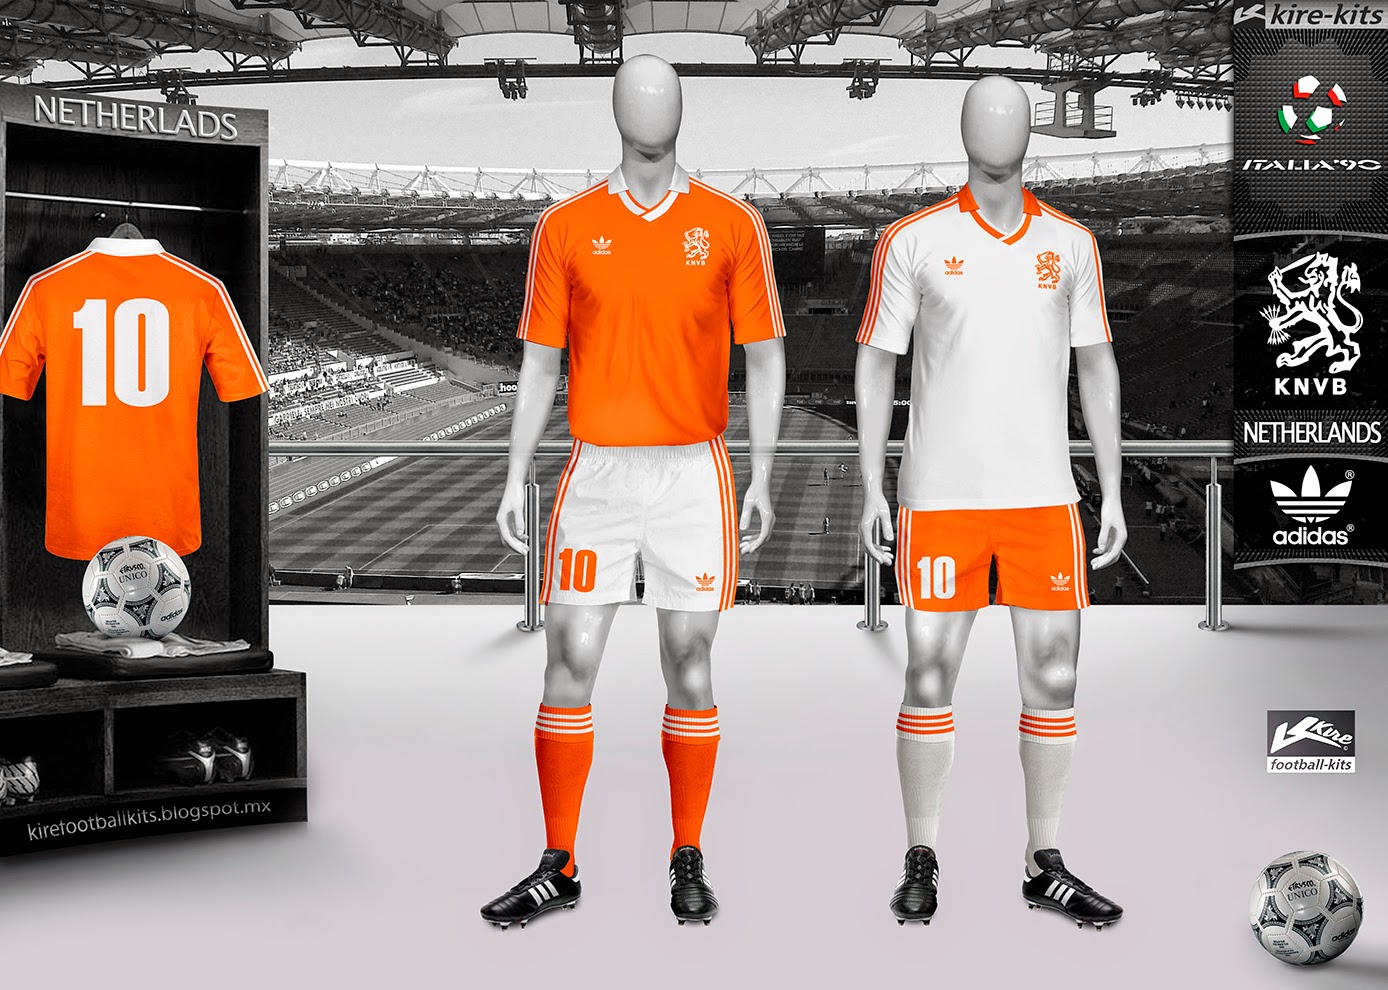 Kire Football Kits: Netherlands kits World Cup 1990